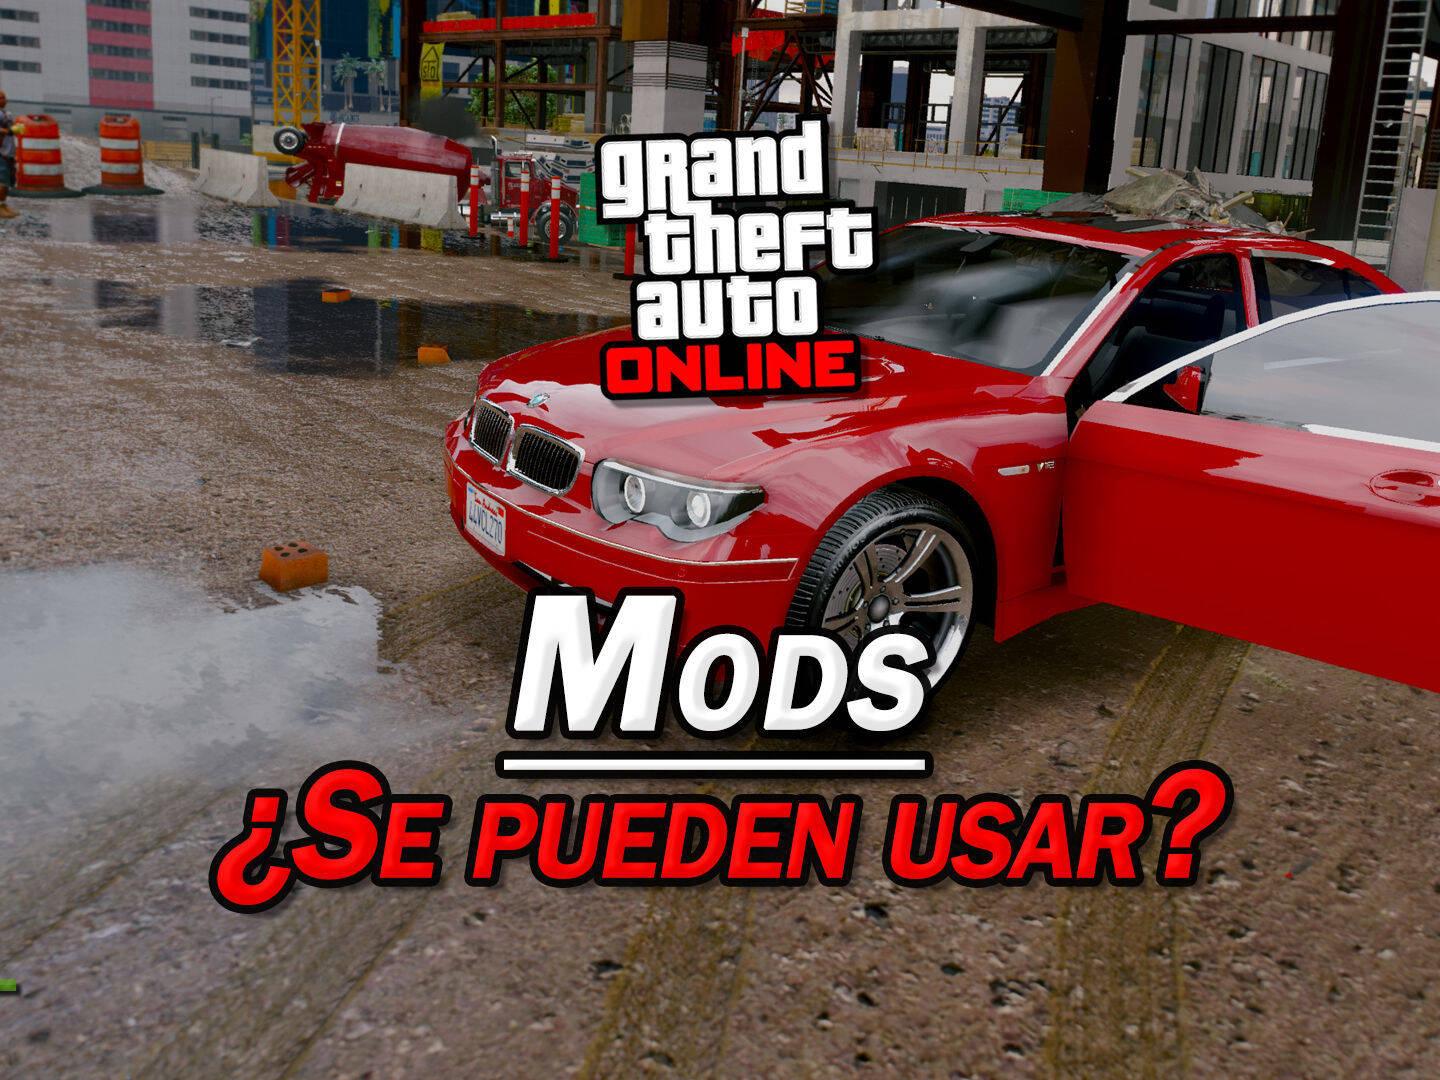 DESBLOQUEO A MI PERSONAJE en GTA 5! Grand Theft Auto V - GTA V Mods 